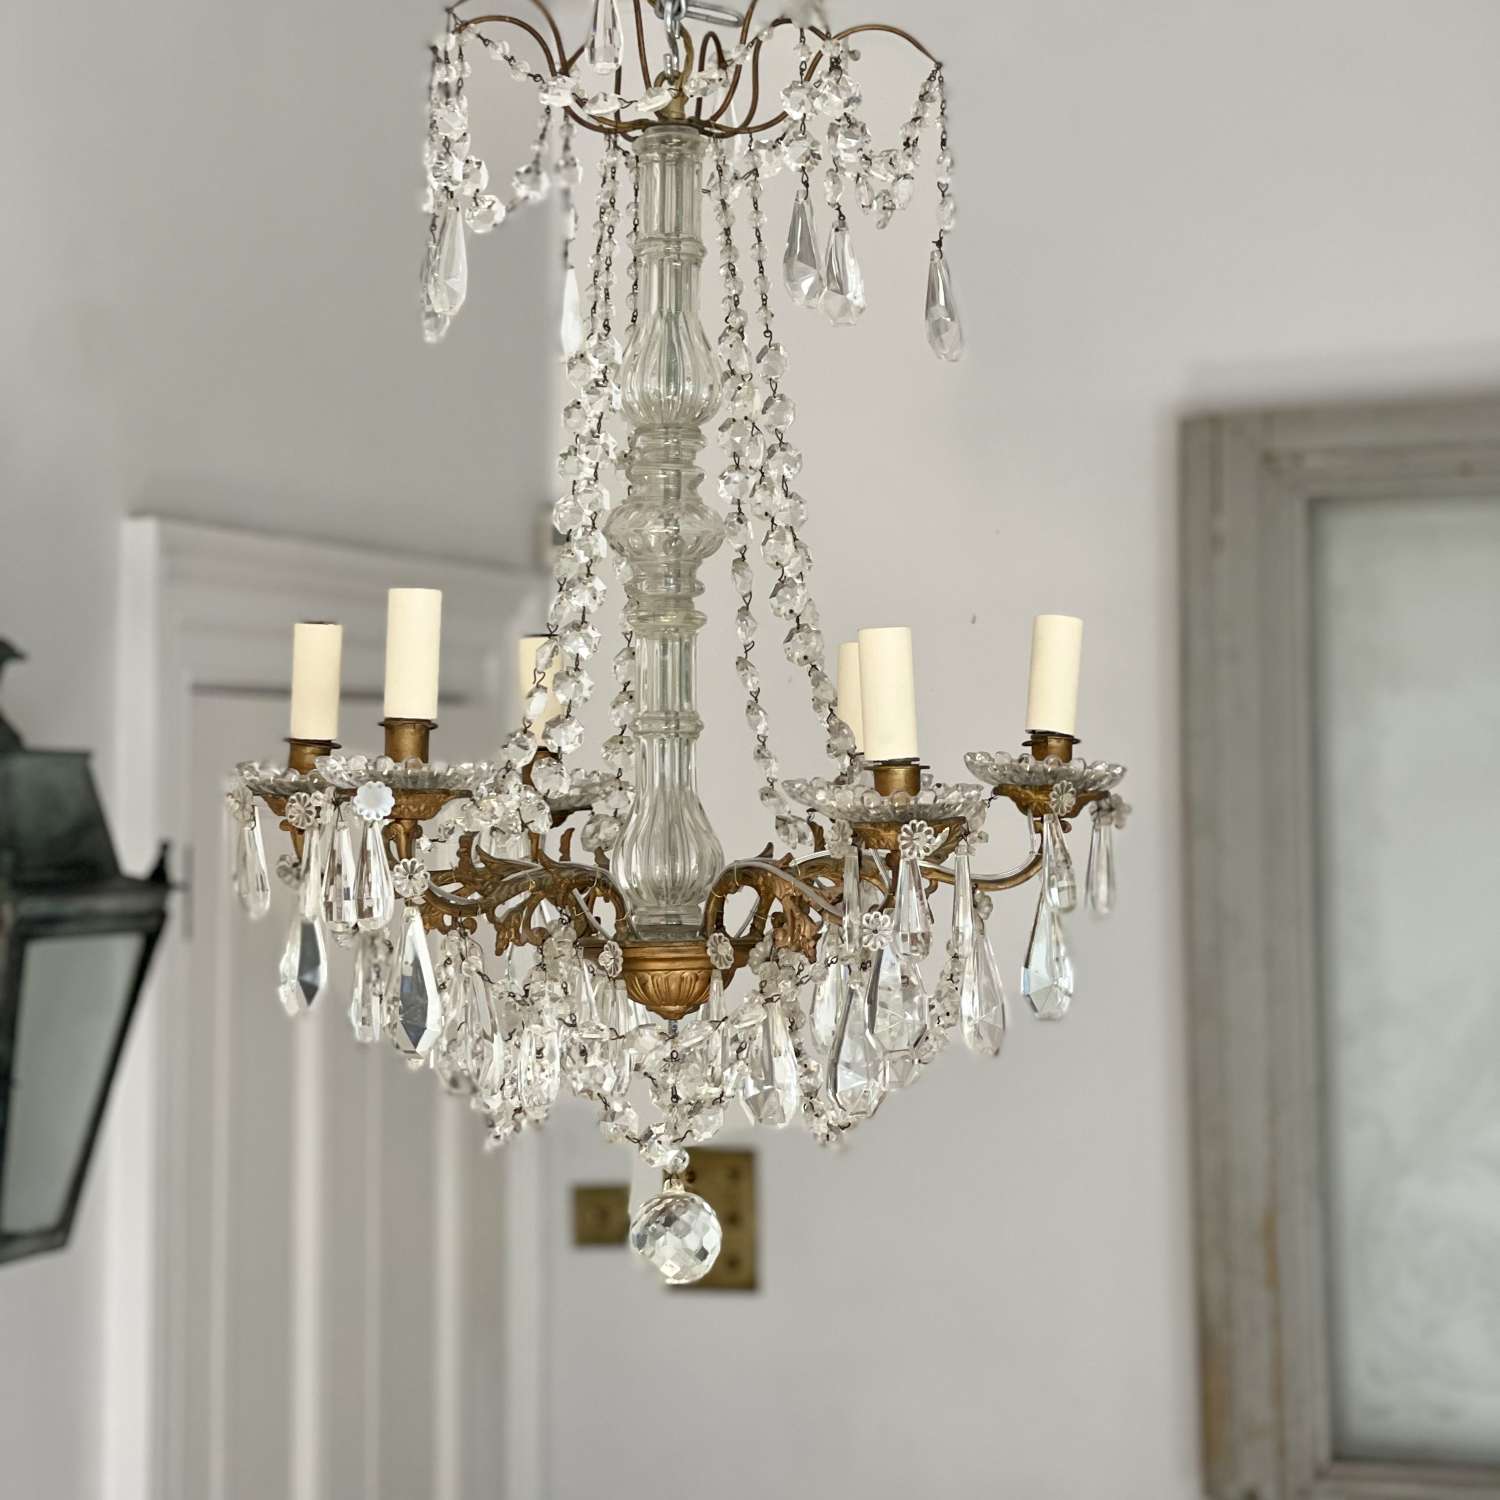 19th century French antique chandelier - rewired